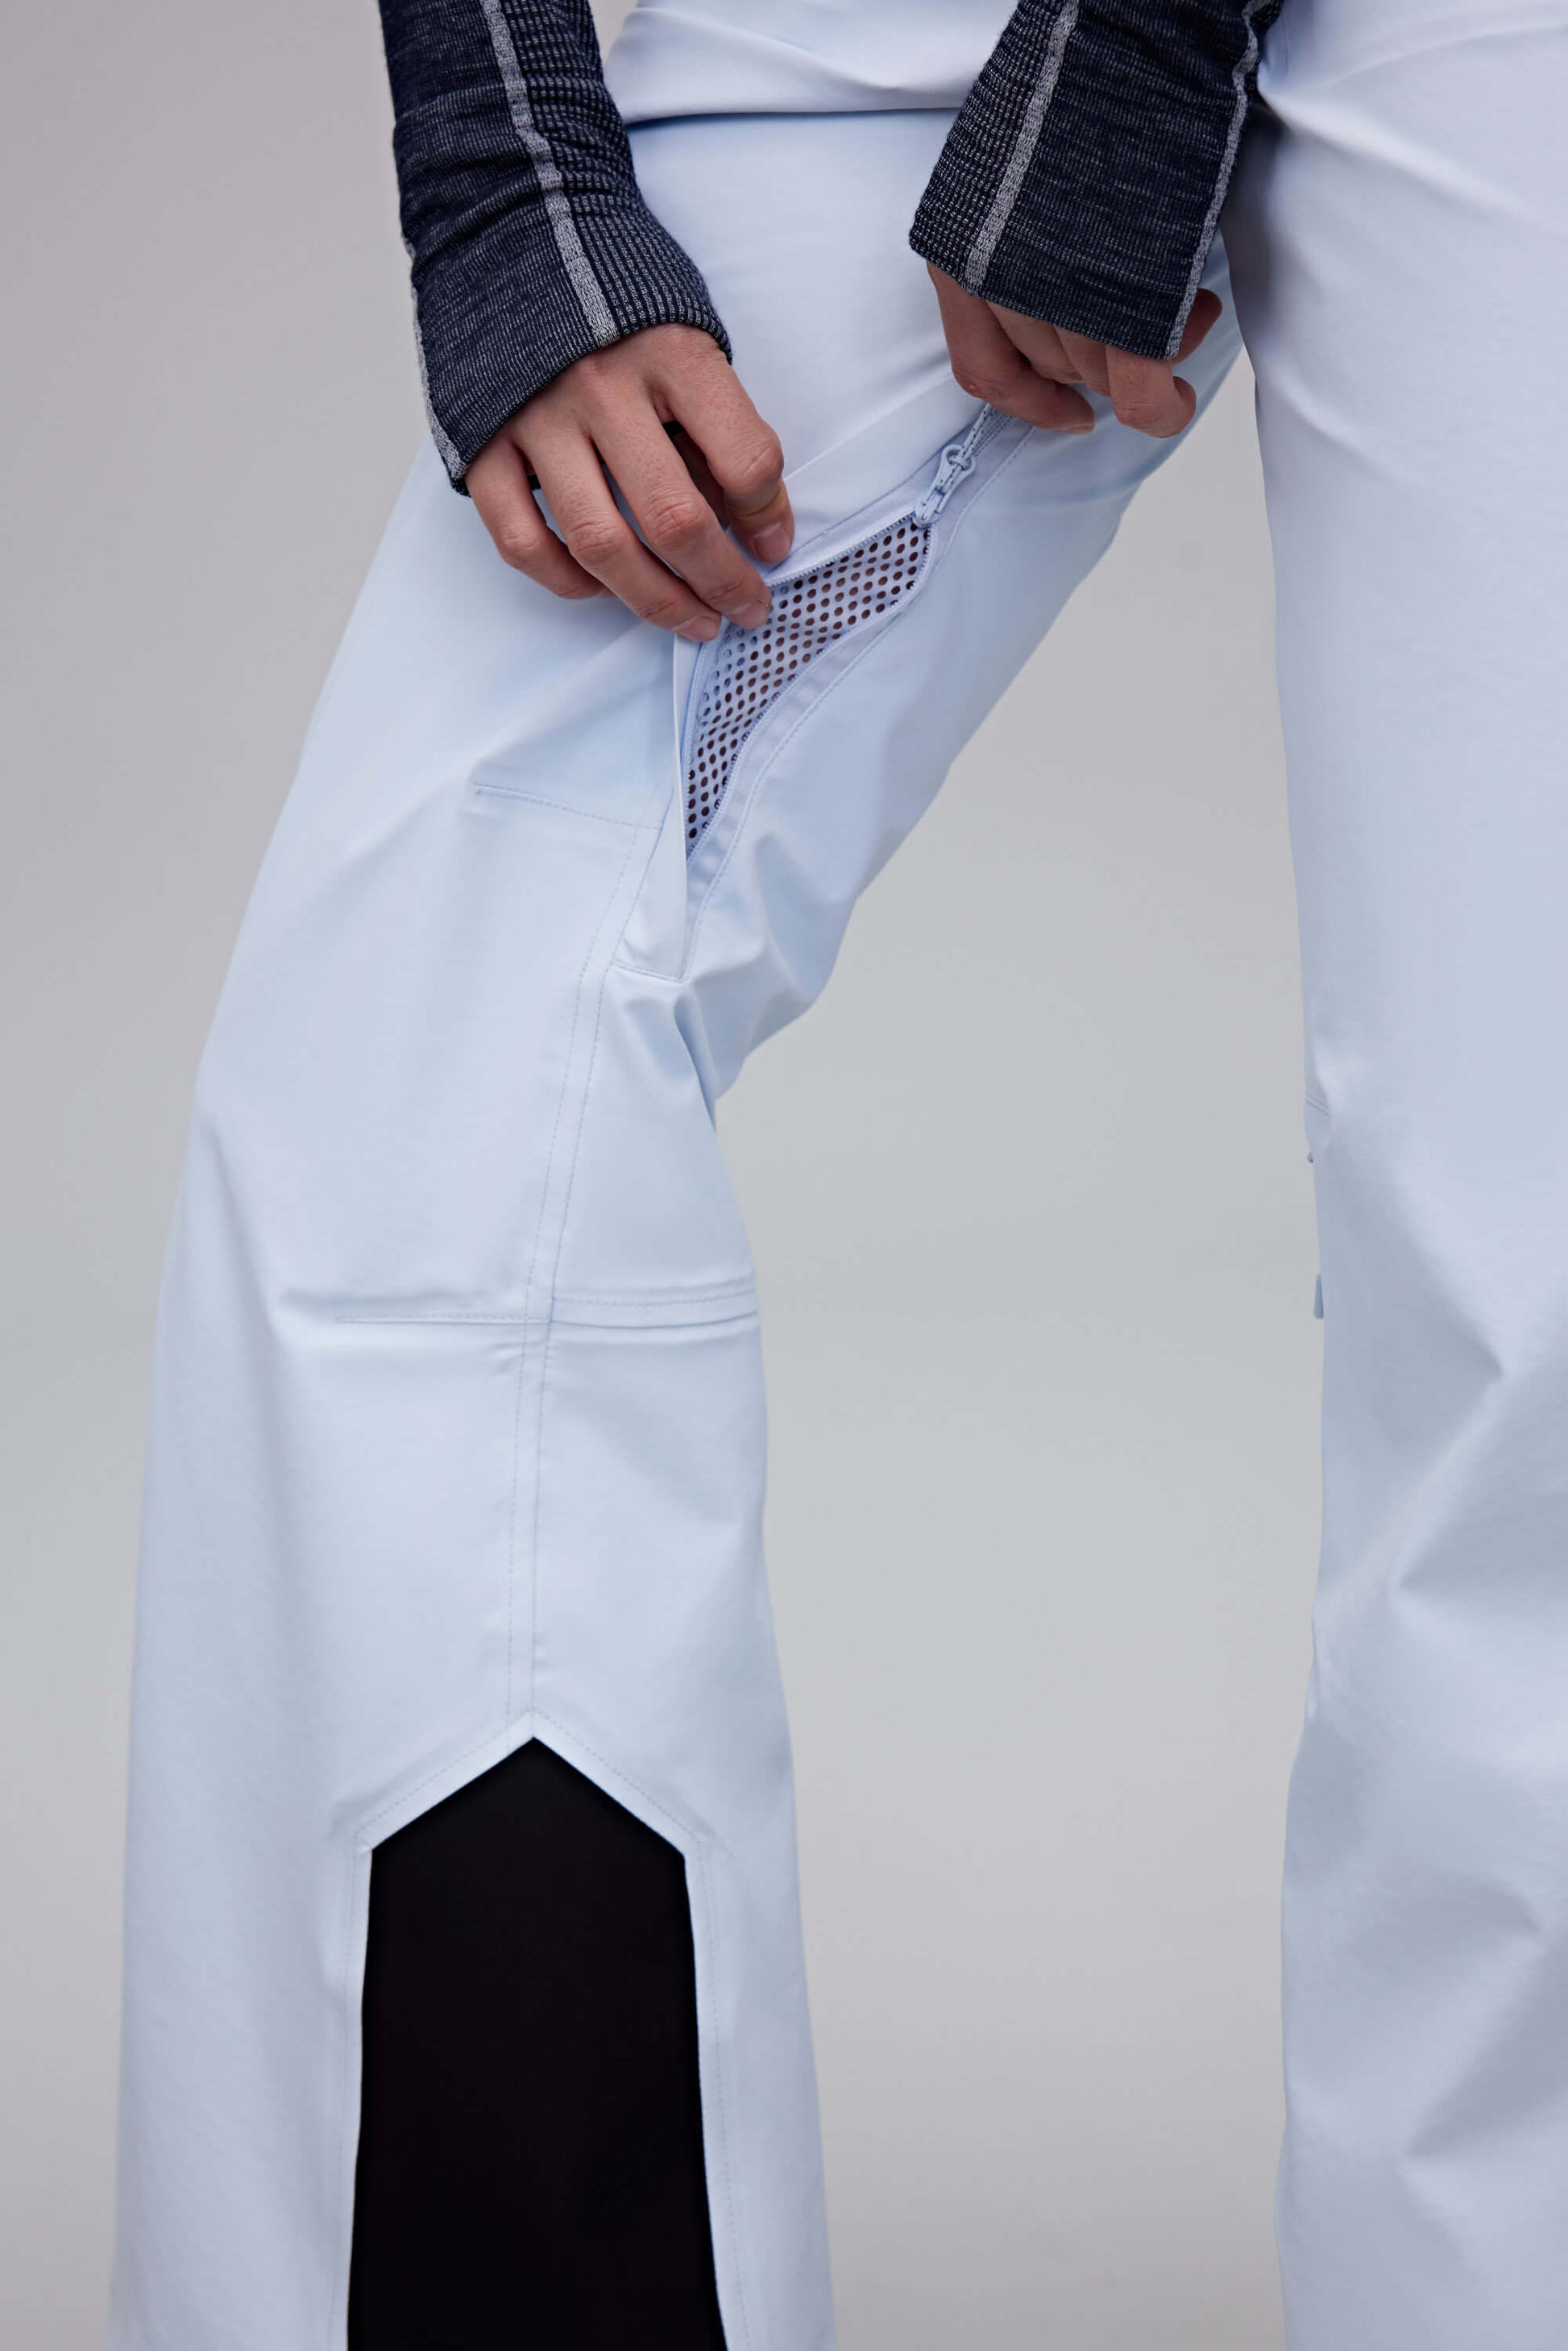 Neiwai Men’s Mid-Calf Socks (3-Pack) | Black/White/Gray | Warm | Warm & Cozy | Minimalist | Cozy | Cotton/Polyester